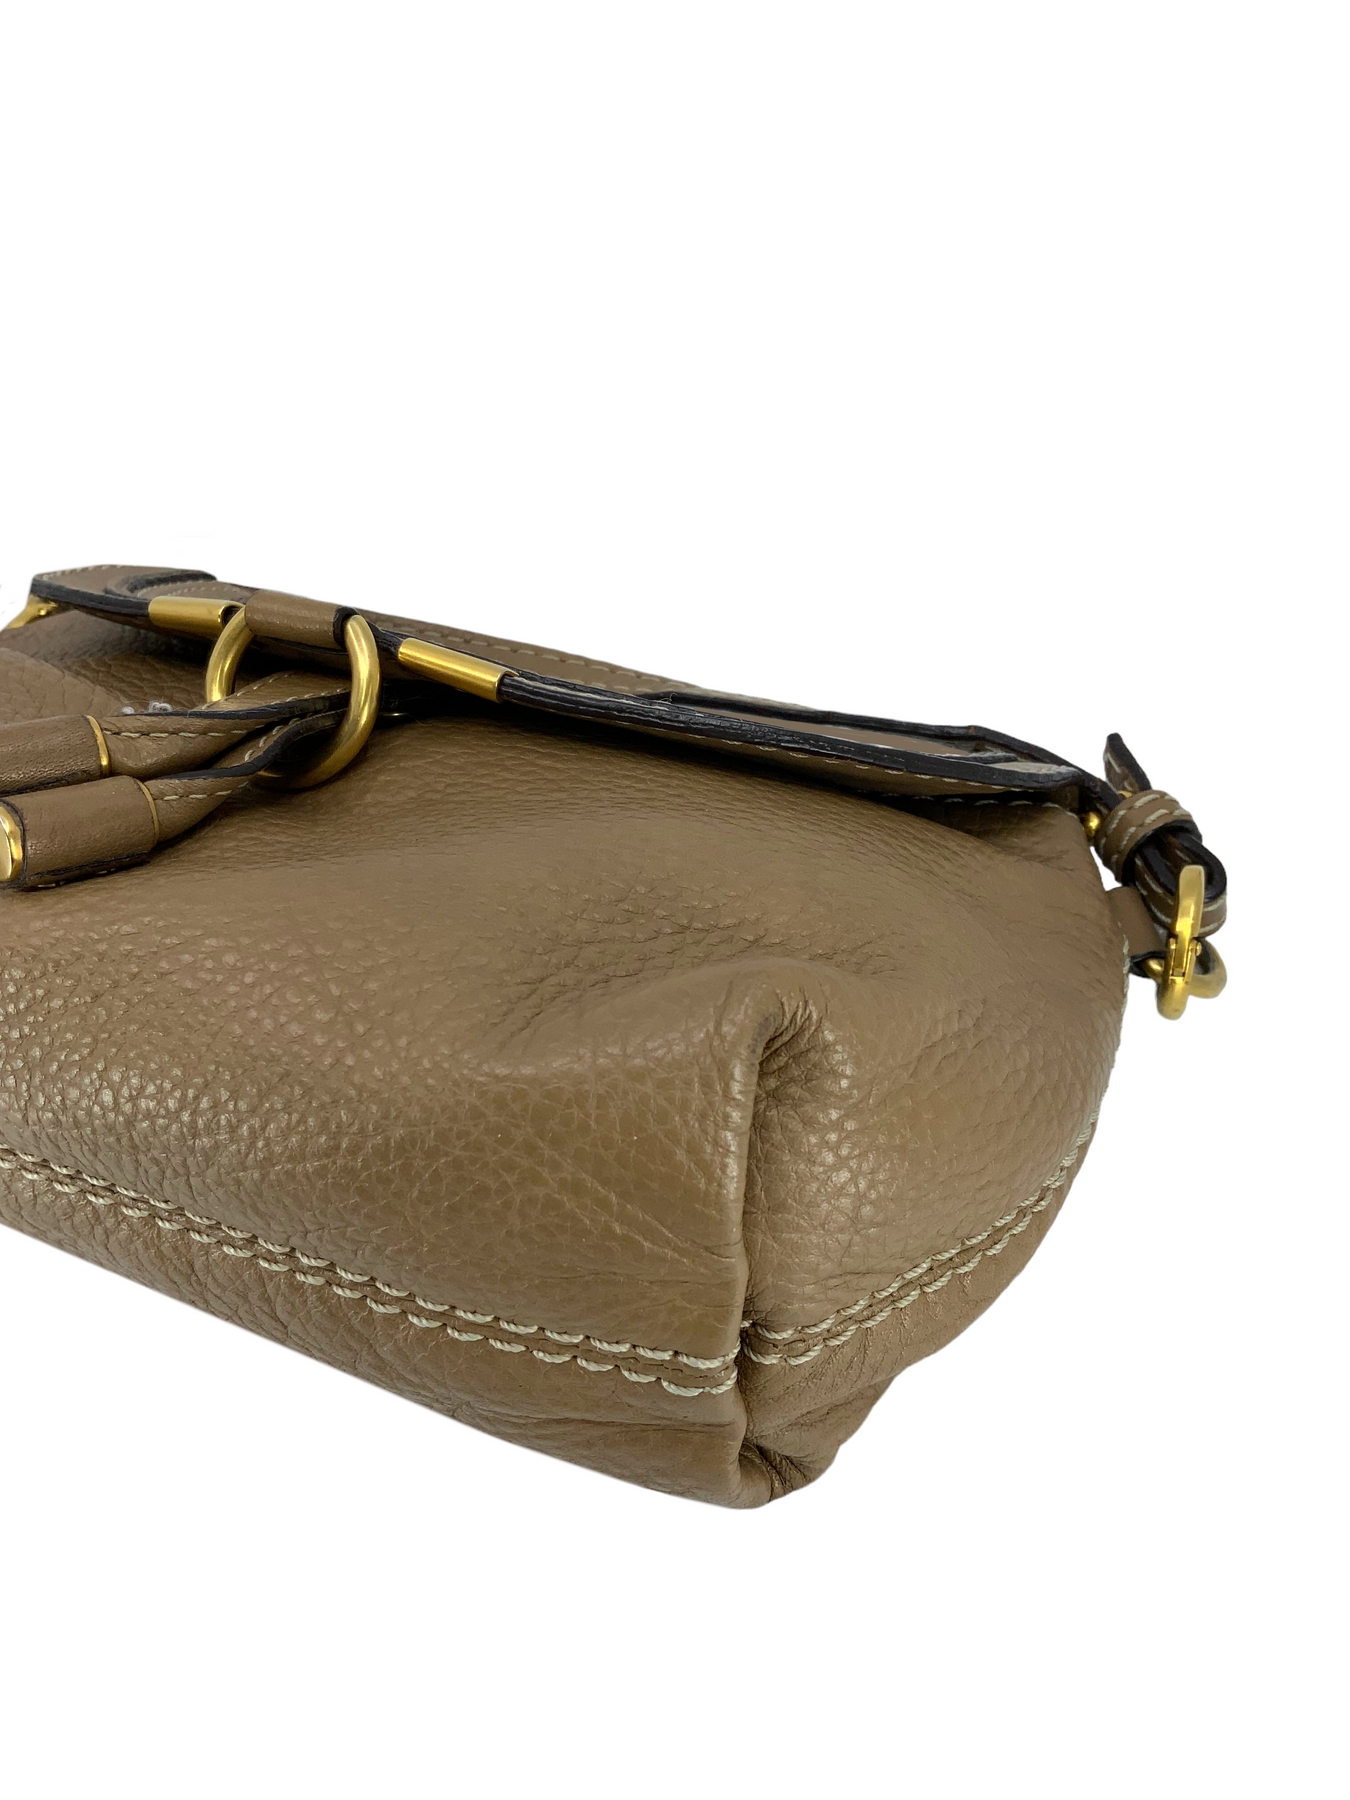 Chloe Pochette Marcie leather Shoulder Bag Crossbody Gold Hardware Used